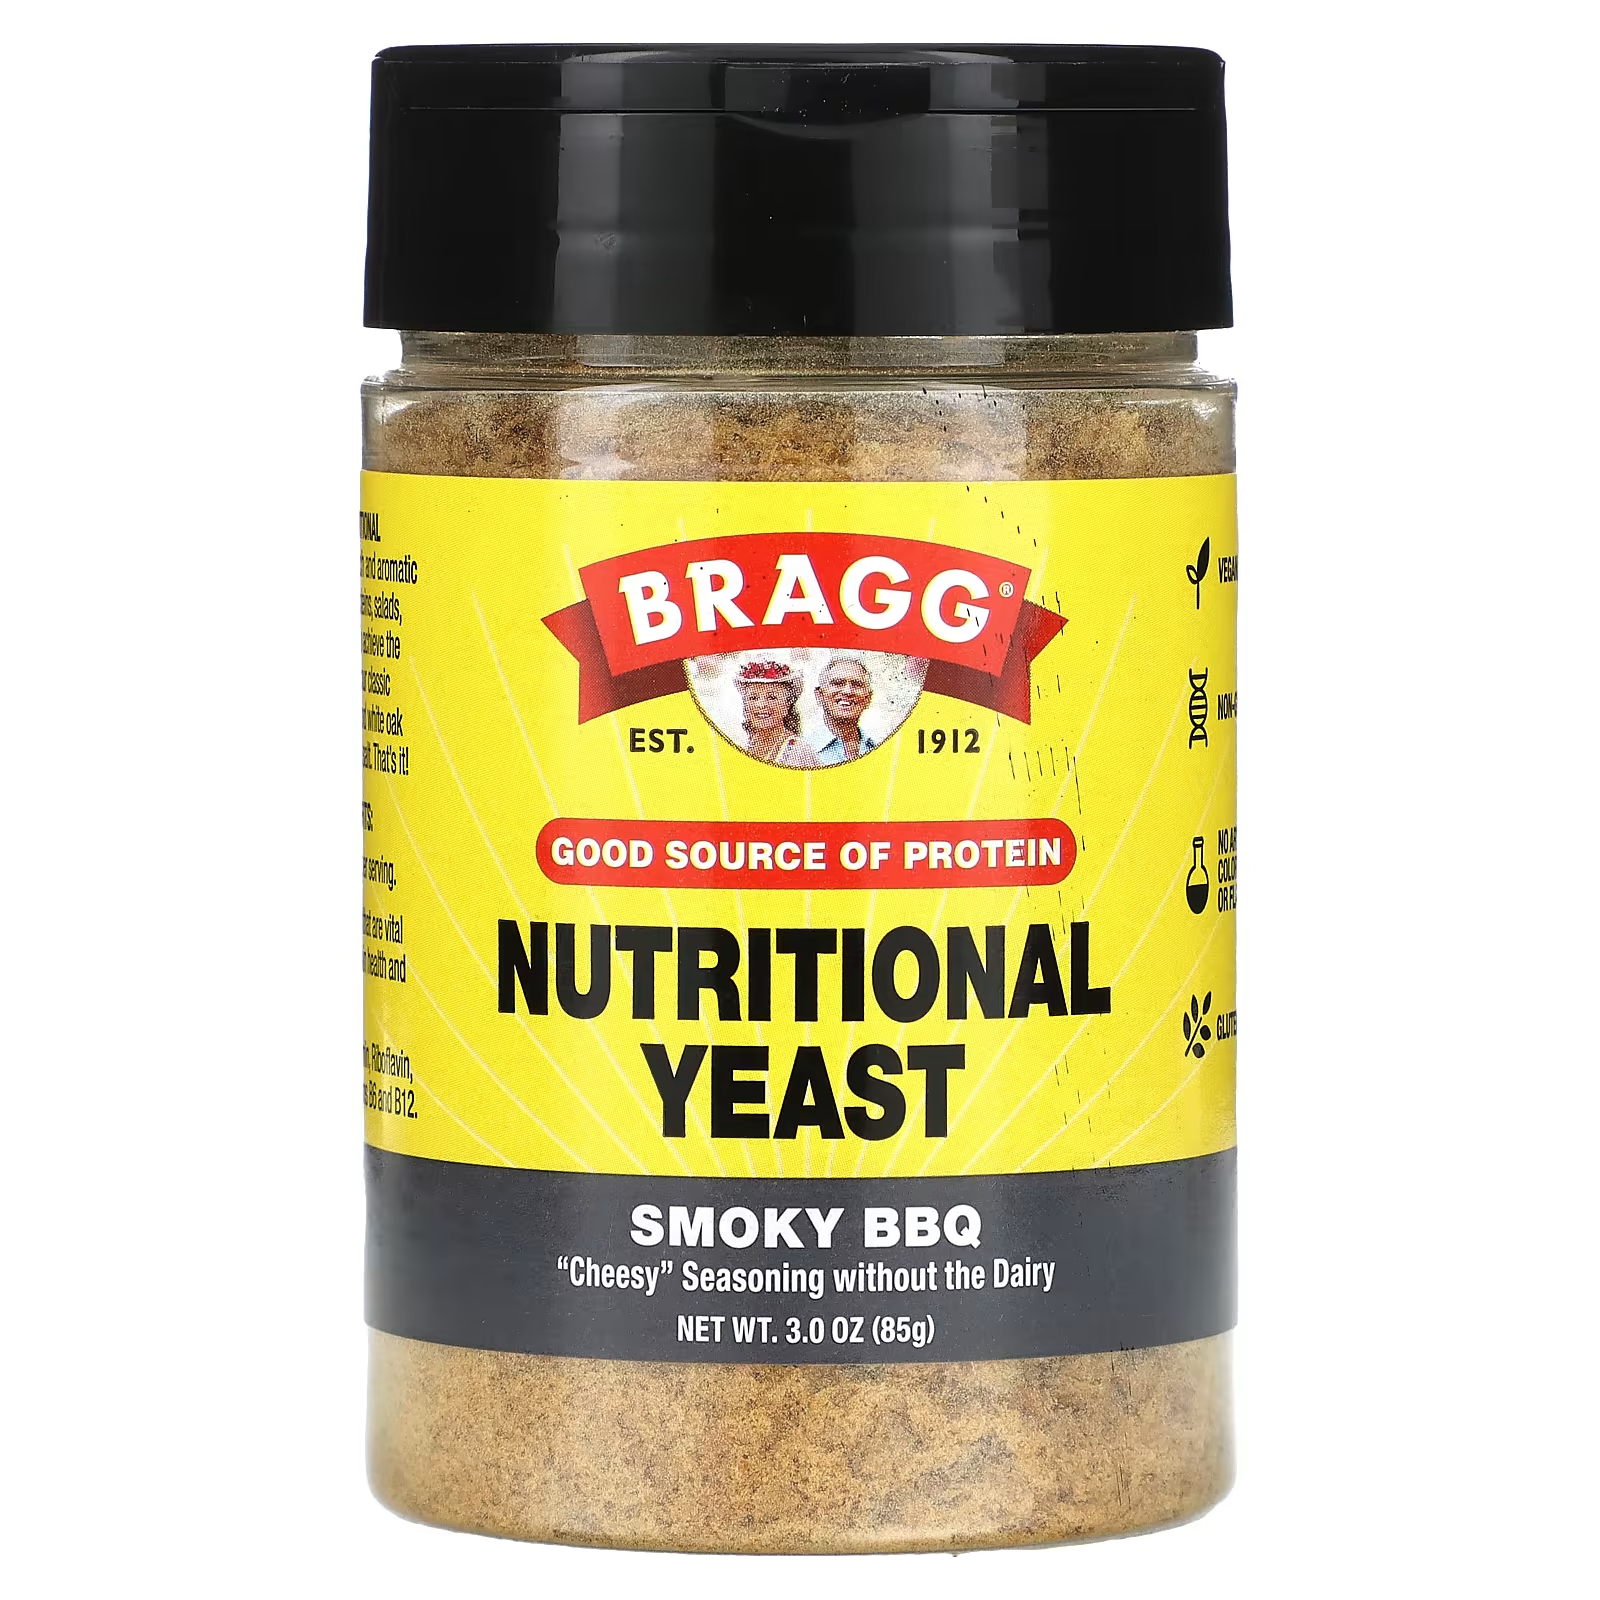 Пищевые дрожжи Bragg Smoky BBQ, 85 г цена и фото